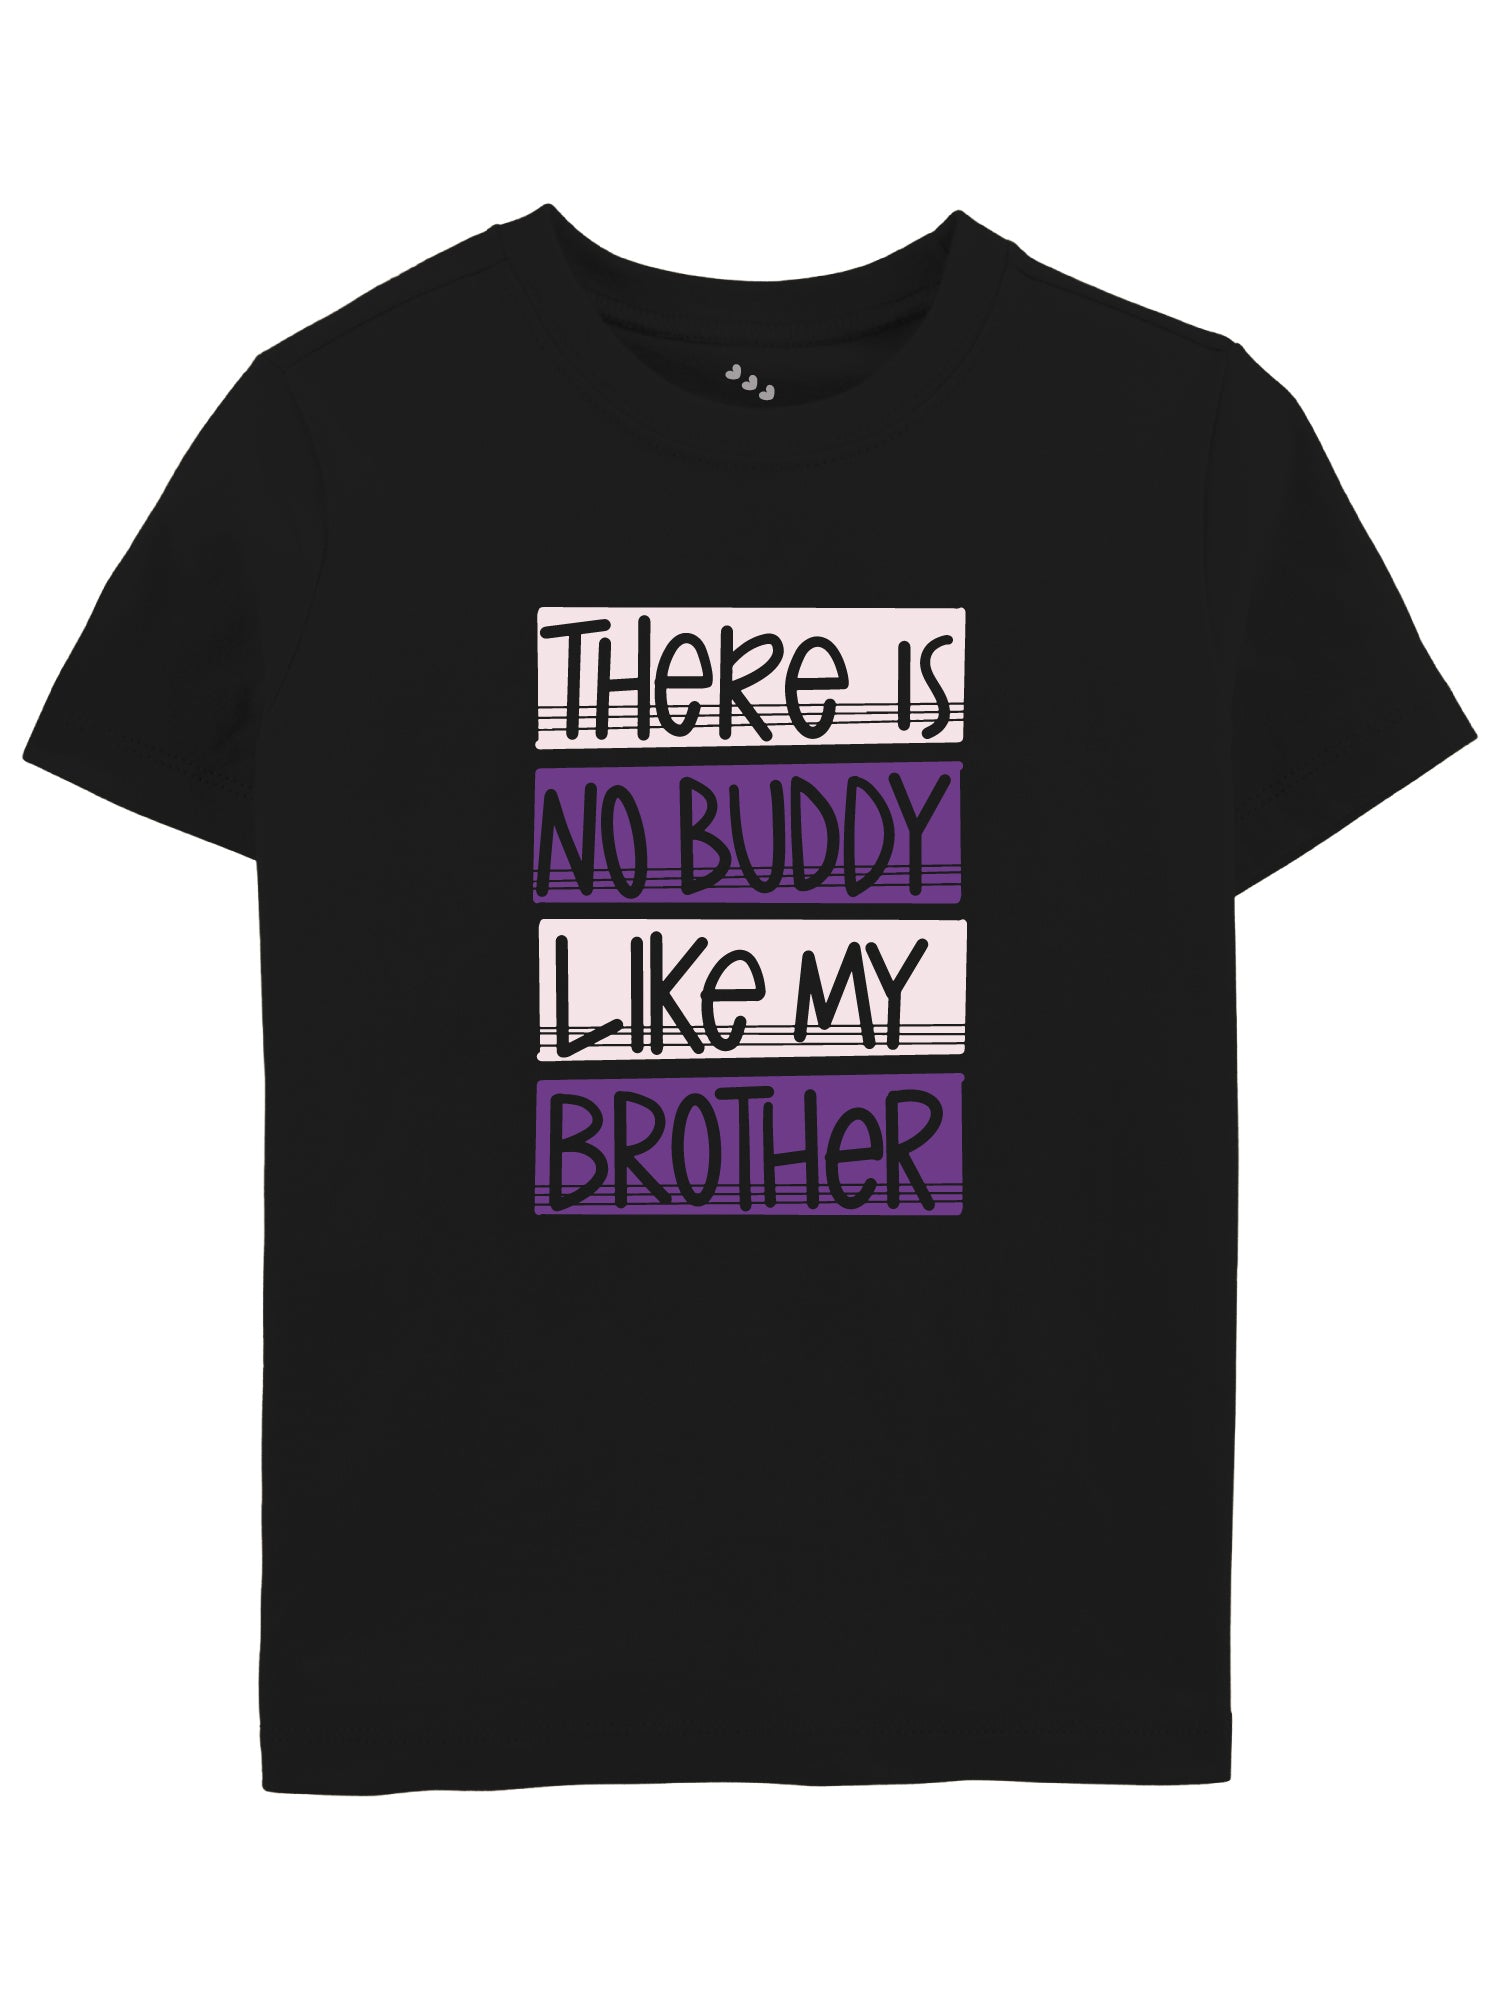 No Buddy Like My Brother - Tshirt